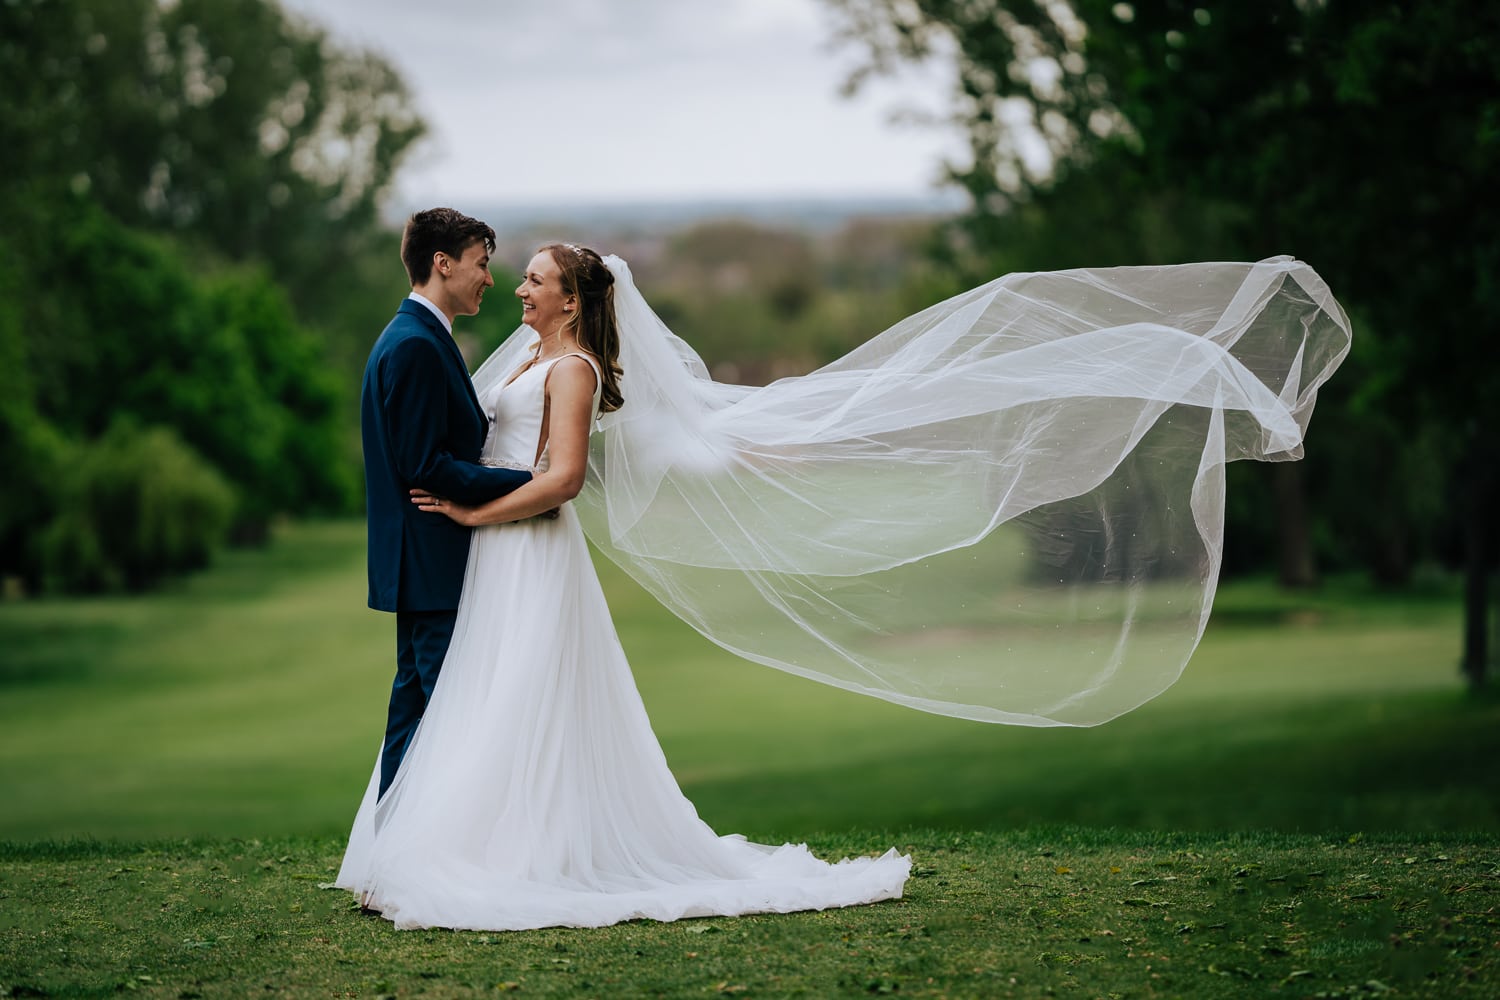 brides veil flowing in the wind